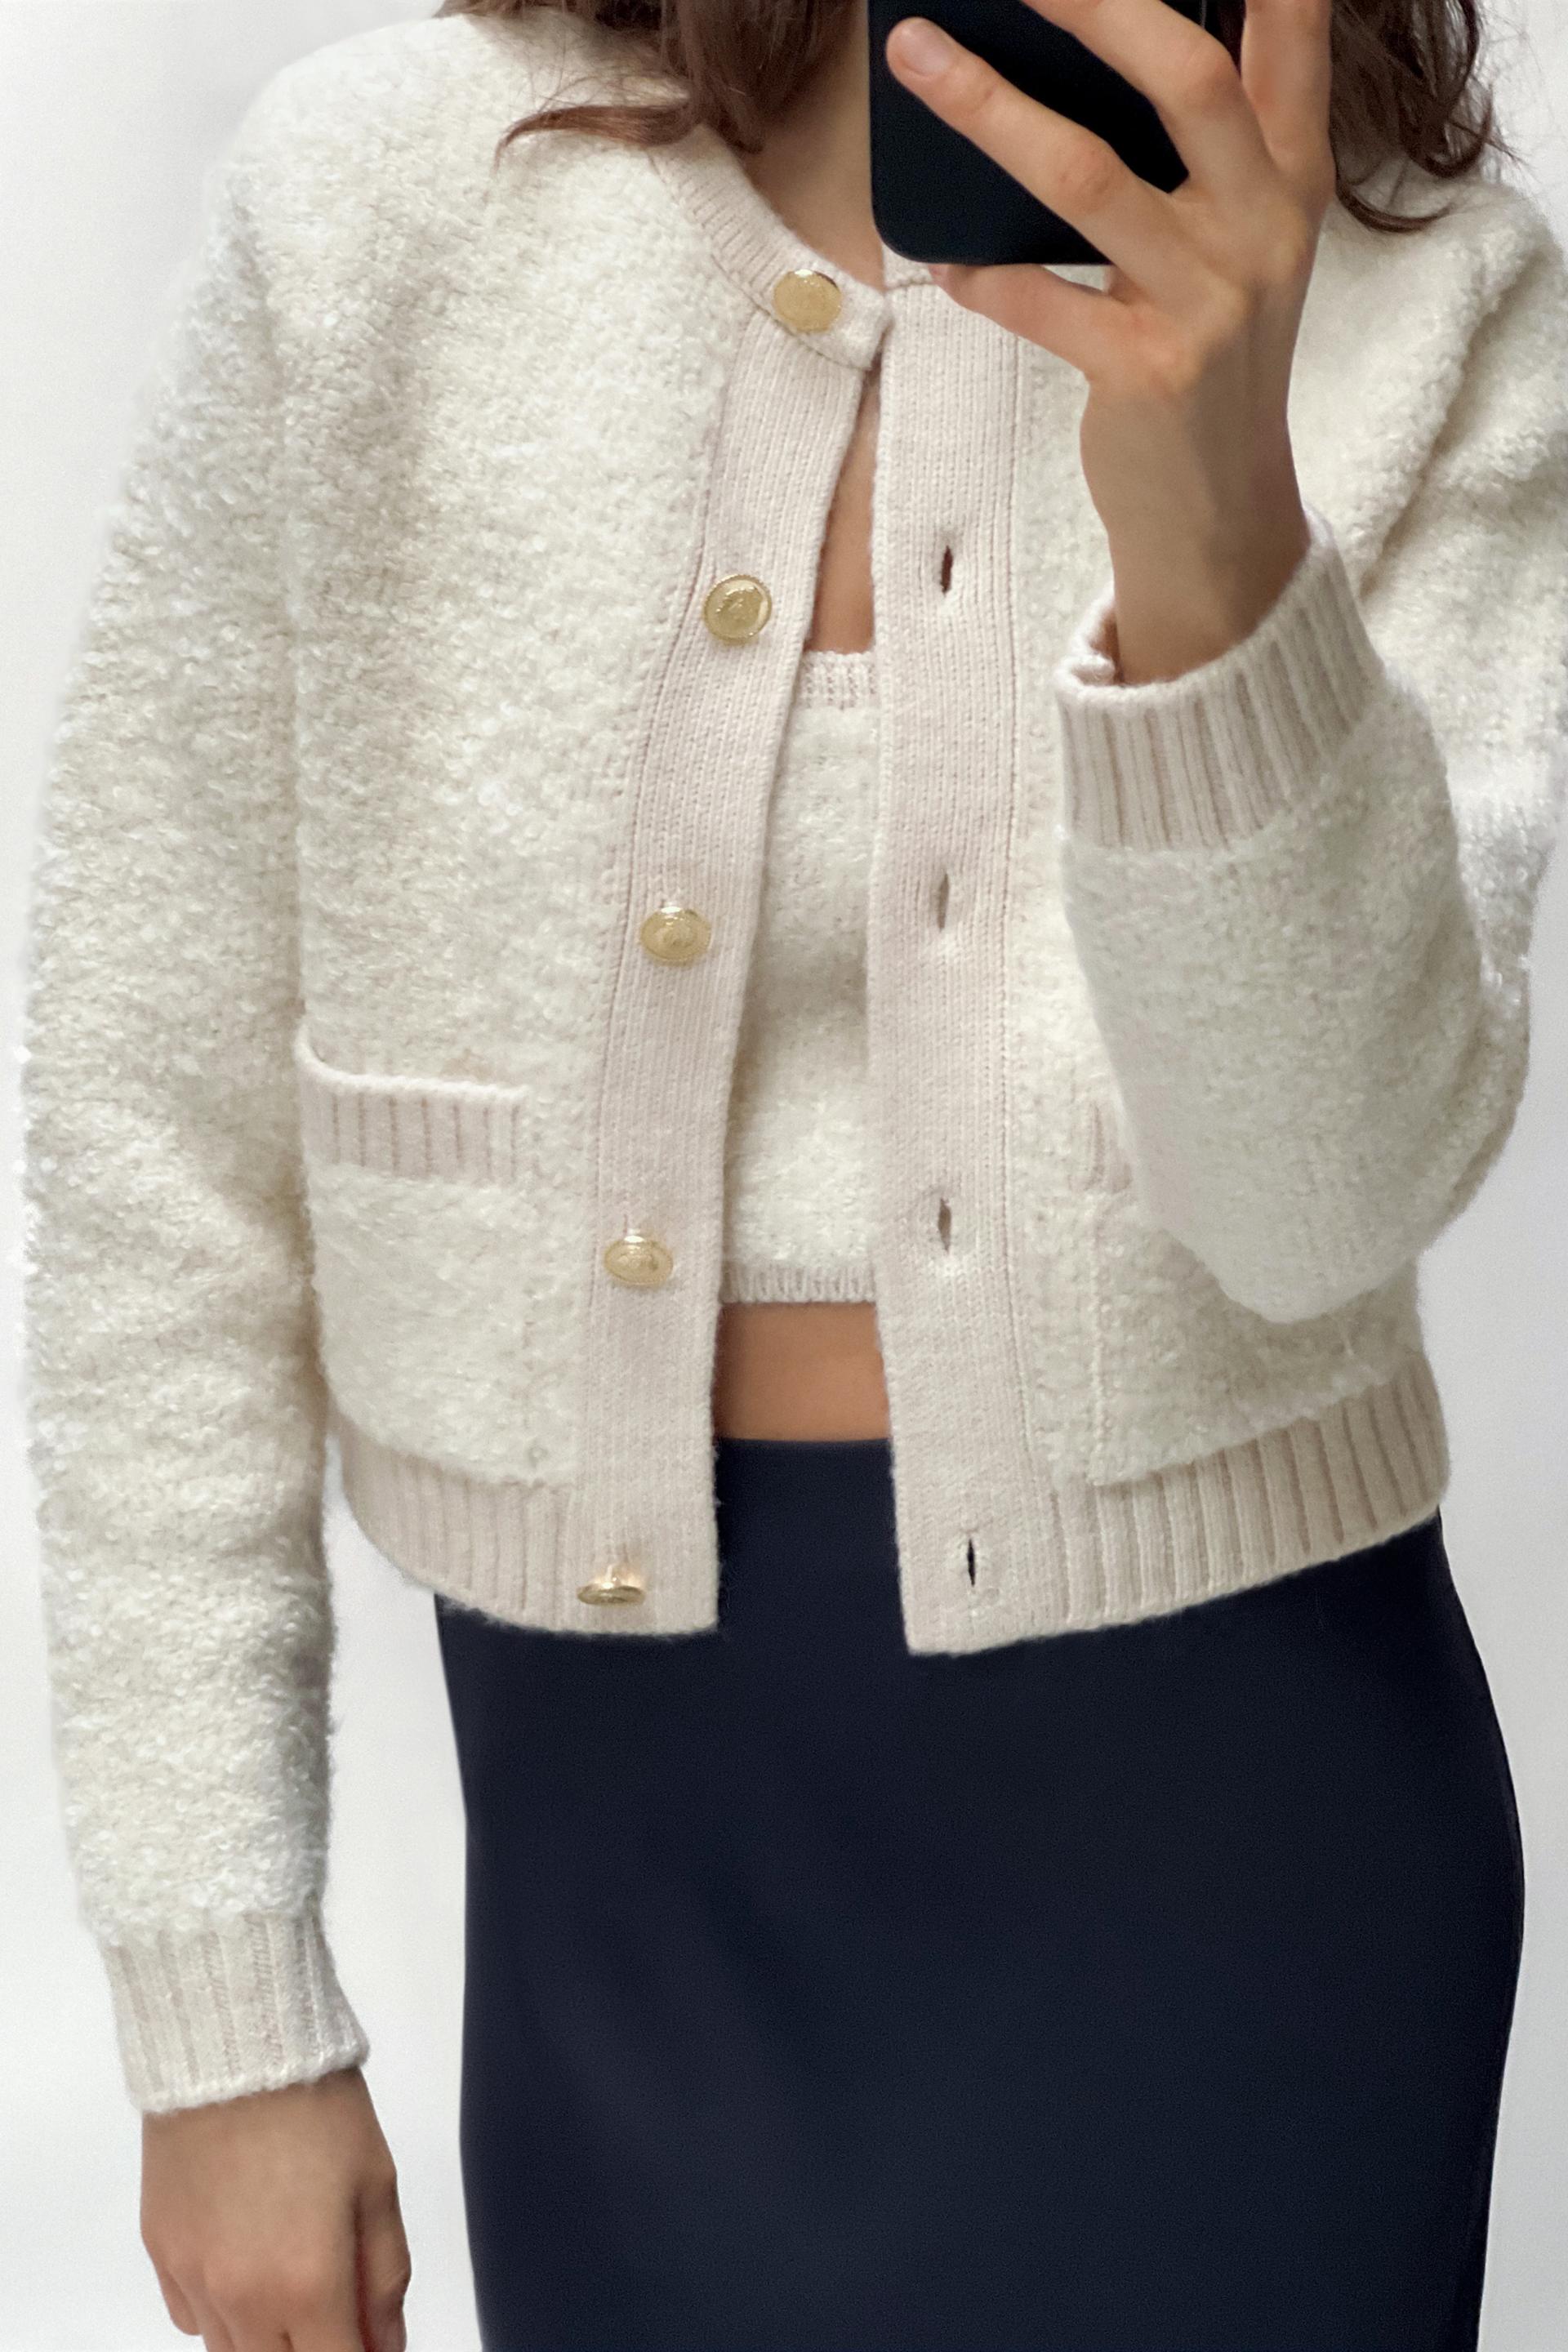 Zara Basic Grey/ Silver Feather Shimmery Textured Sweater Cardigan Jacket S